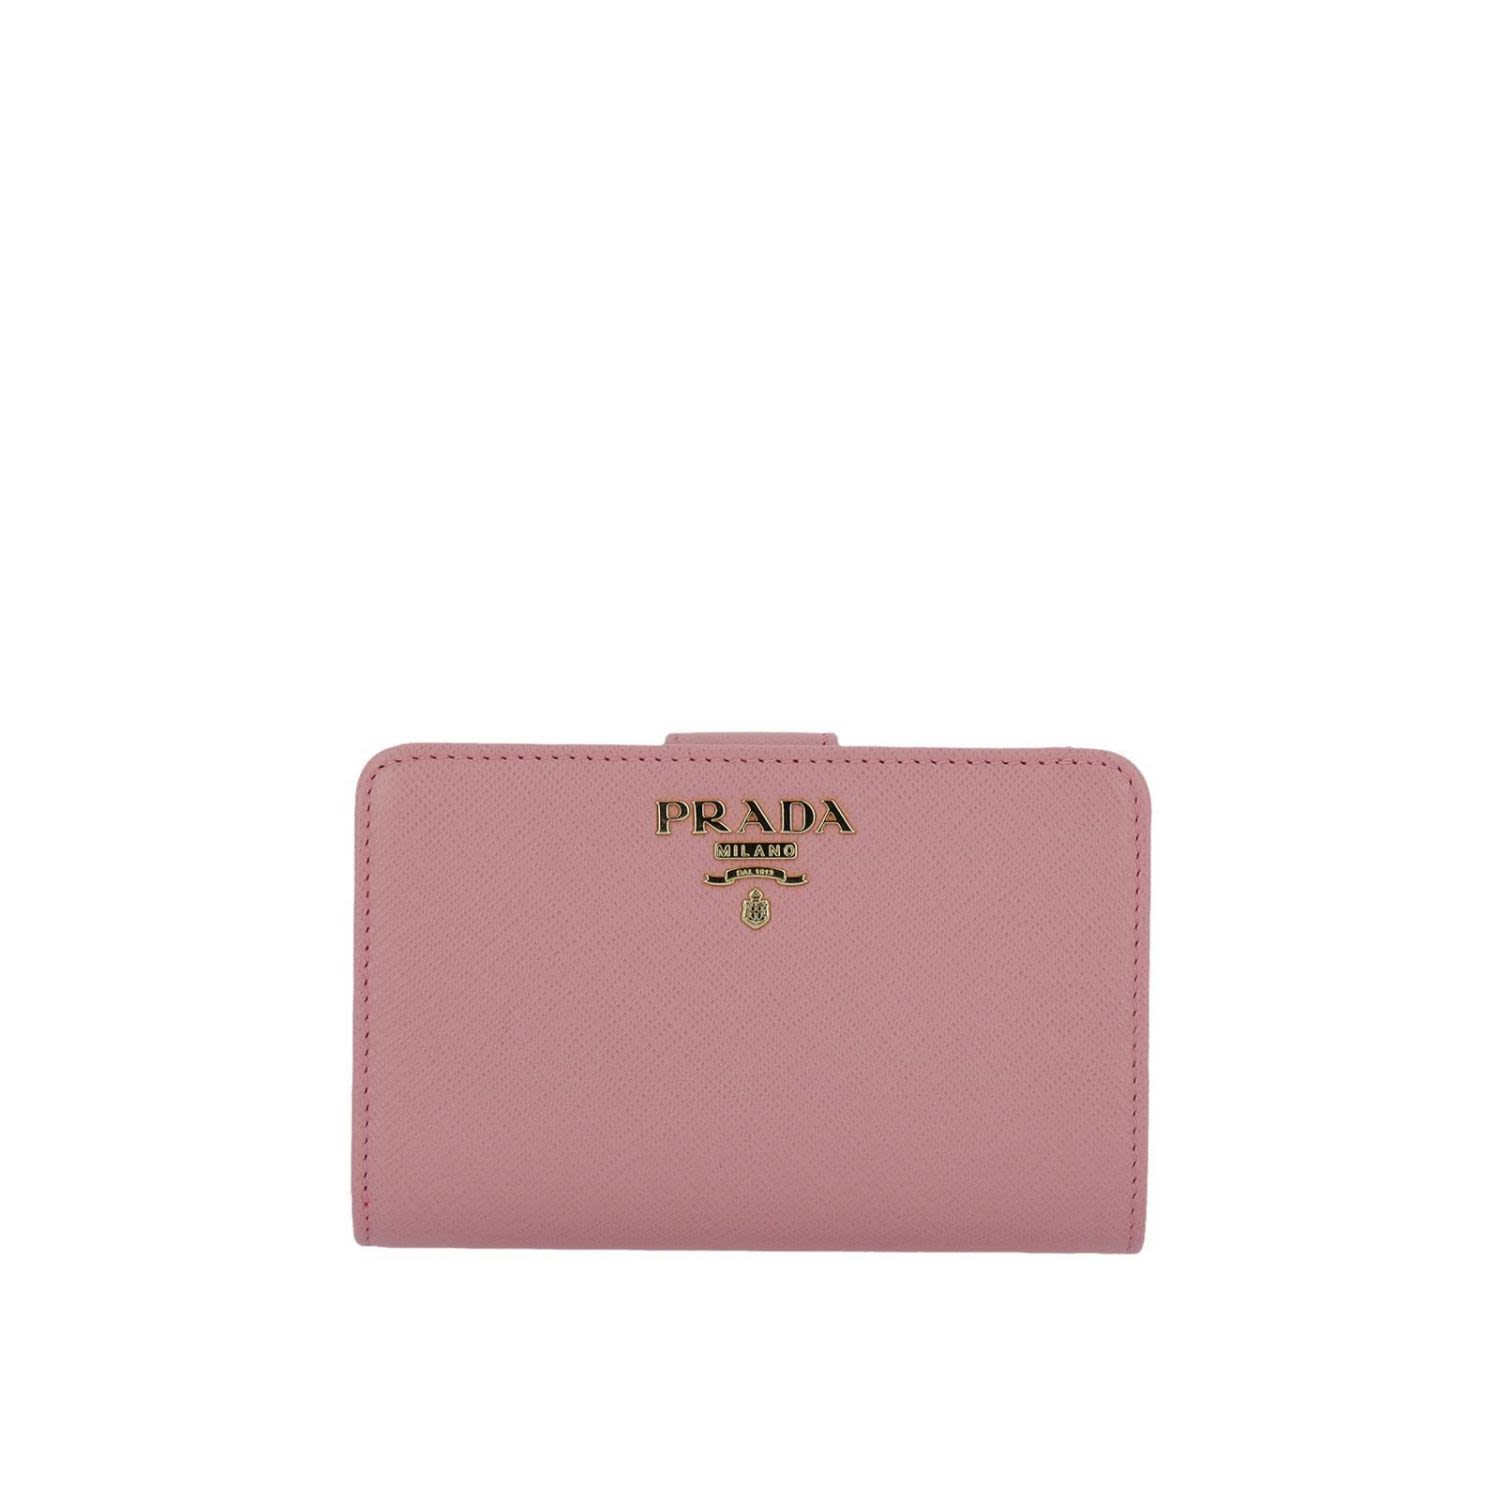 italist | Best price in the market for Prada Wallet Wallet Women Prada ...